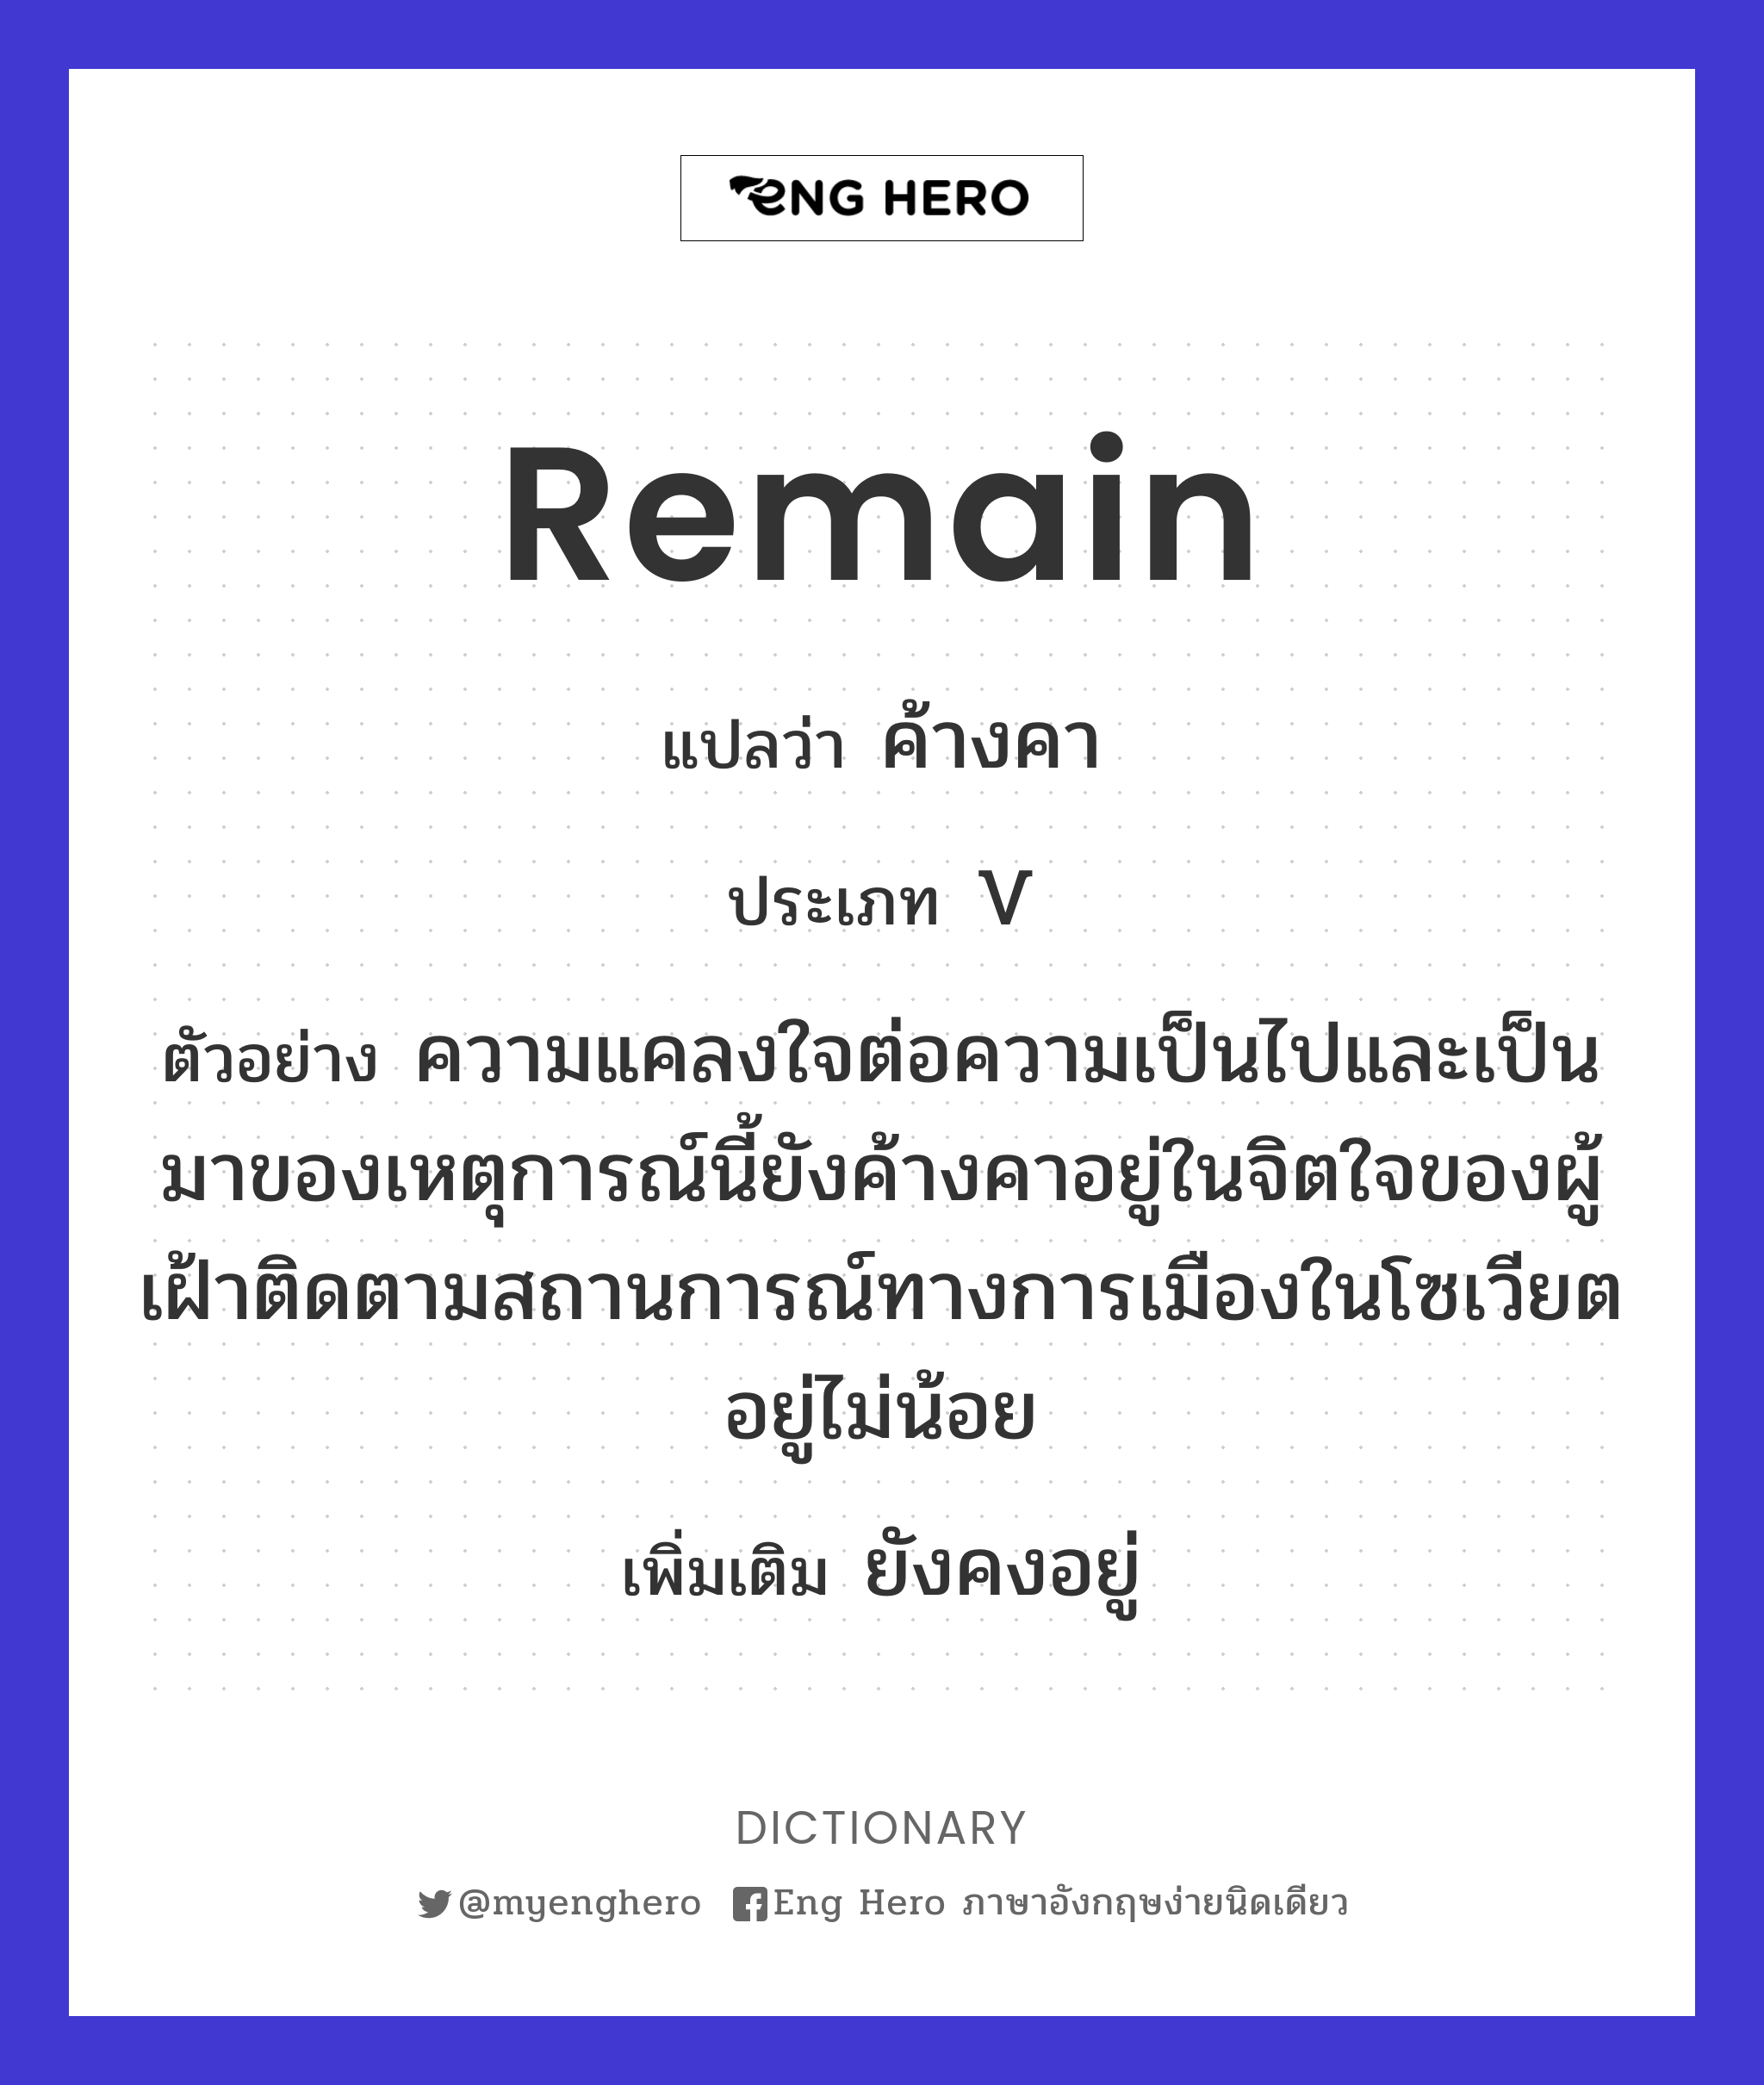 remain